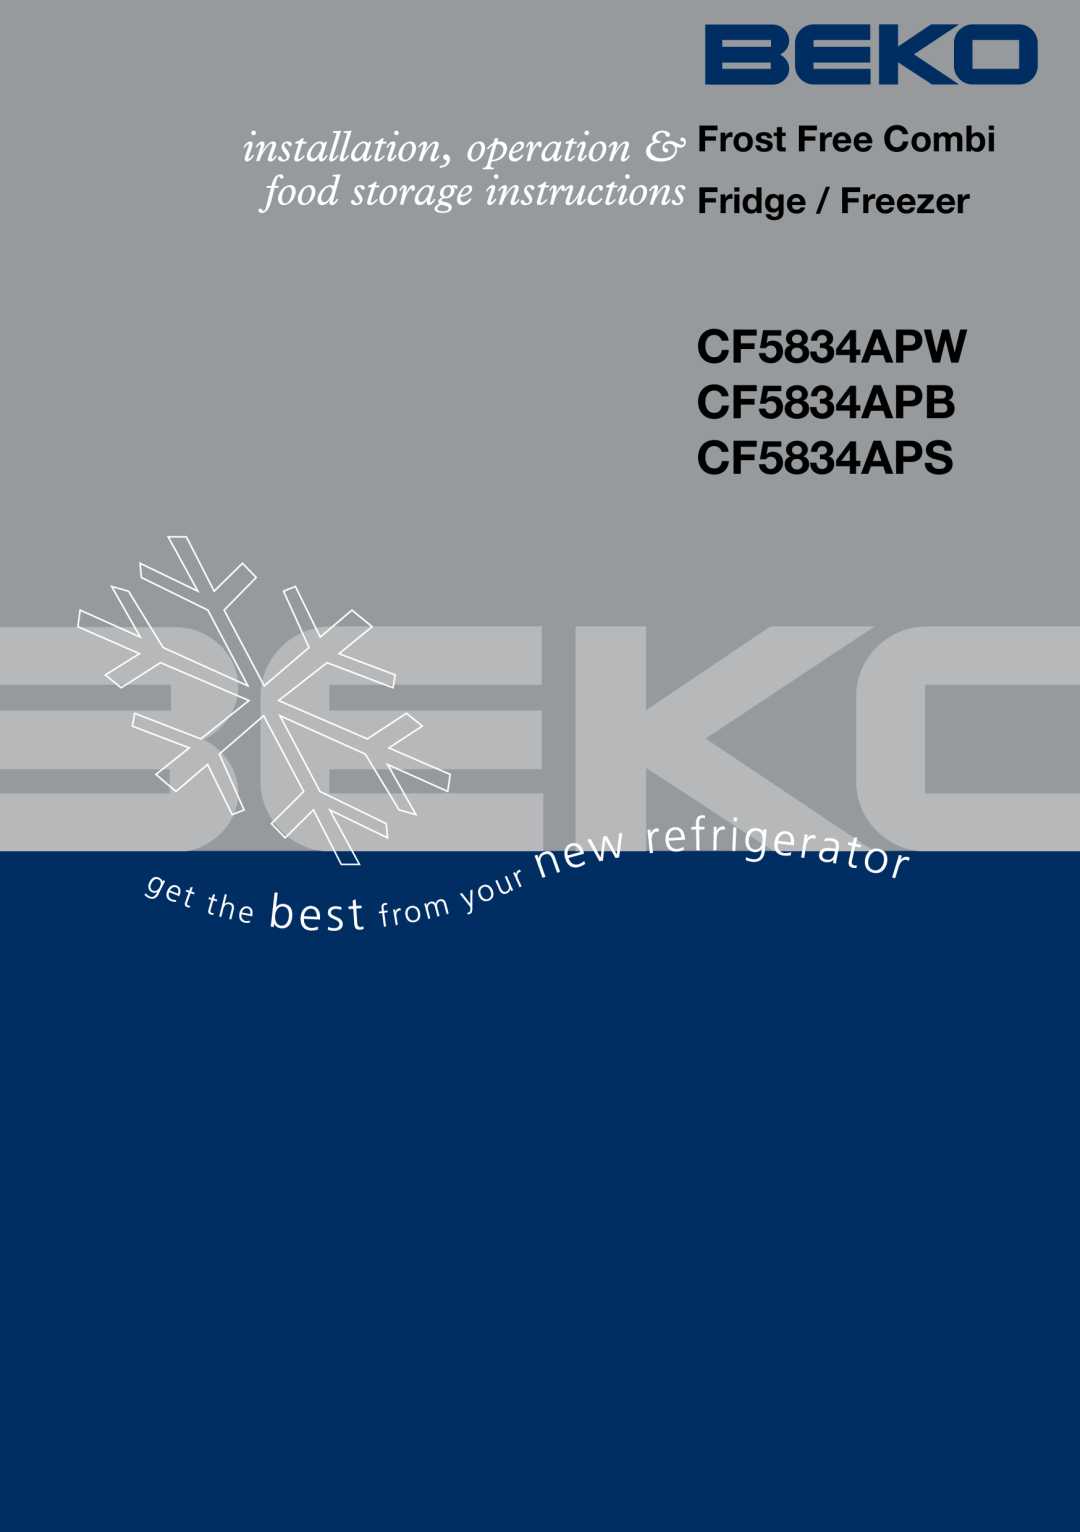 Beko manual Frost Free Combi Fridge / Freezer, CF5834APW CF5834APB CF5834APS 